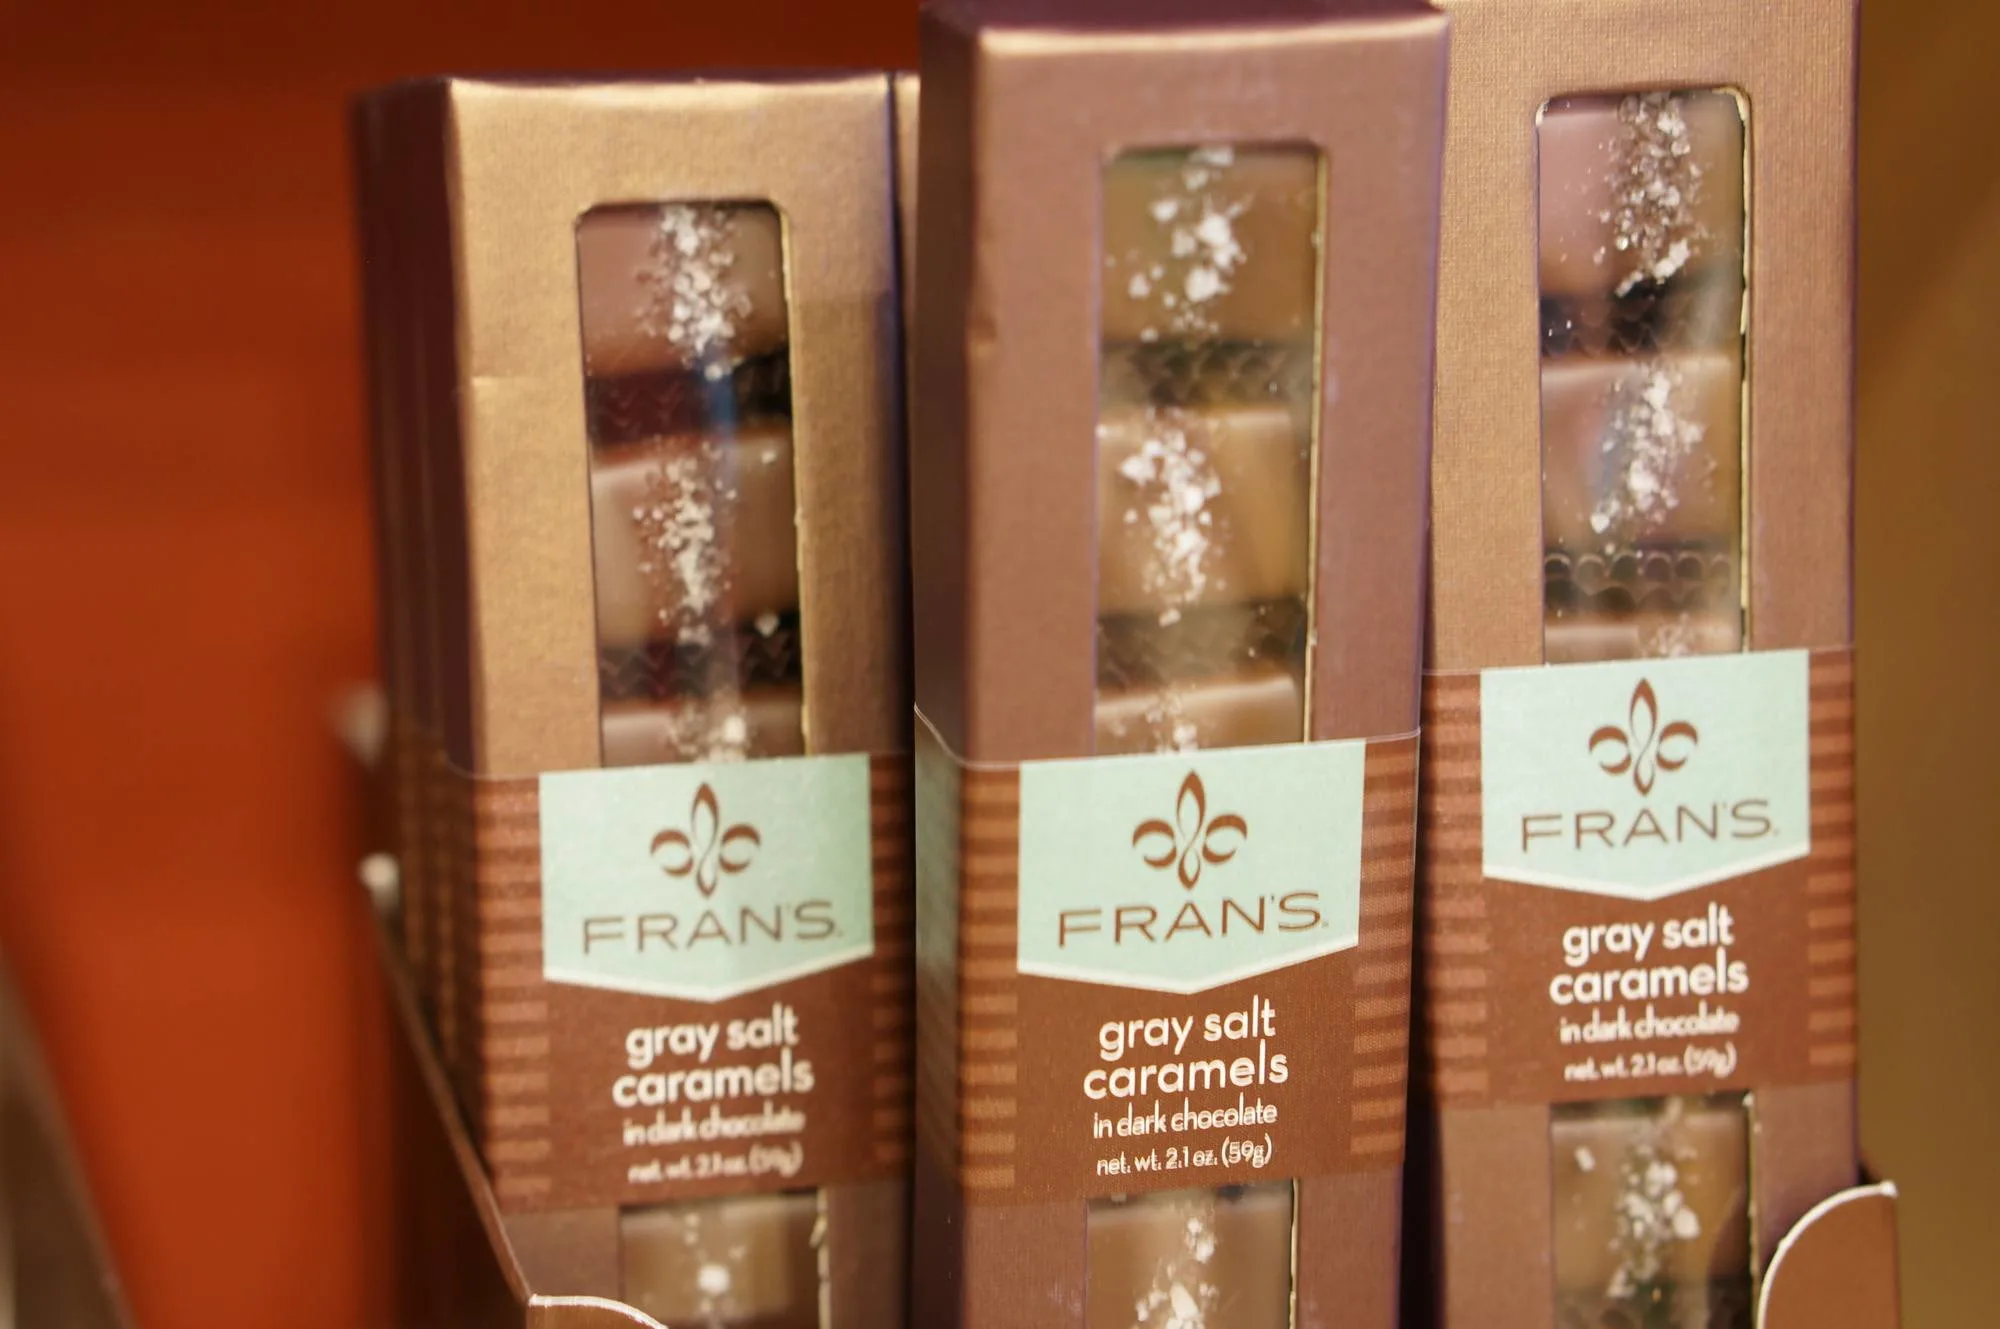 Fran's grey salt caramels, a perfect Seattle souvenir.